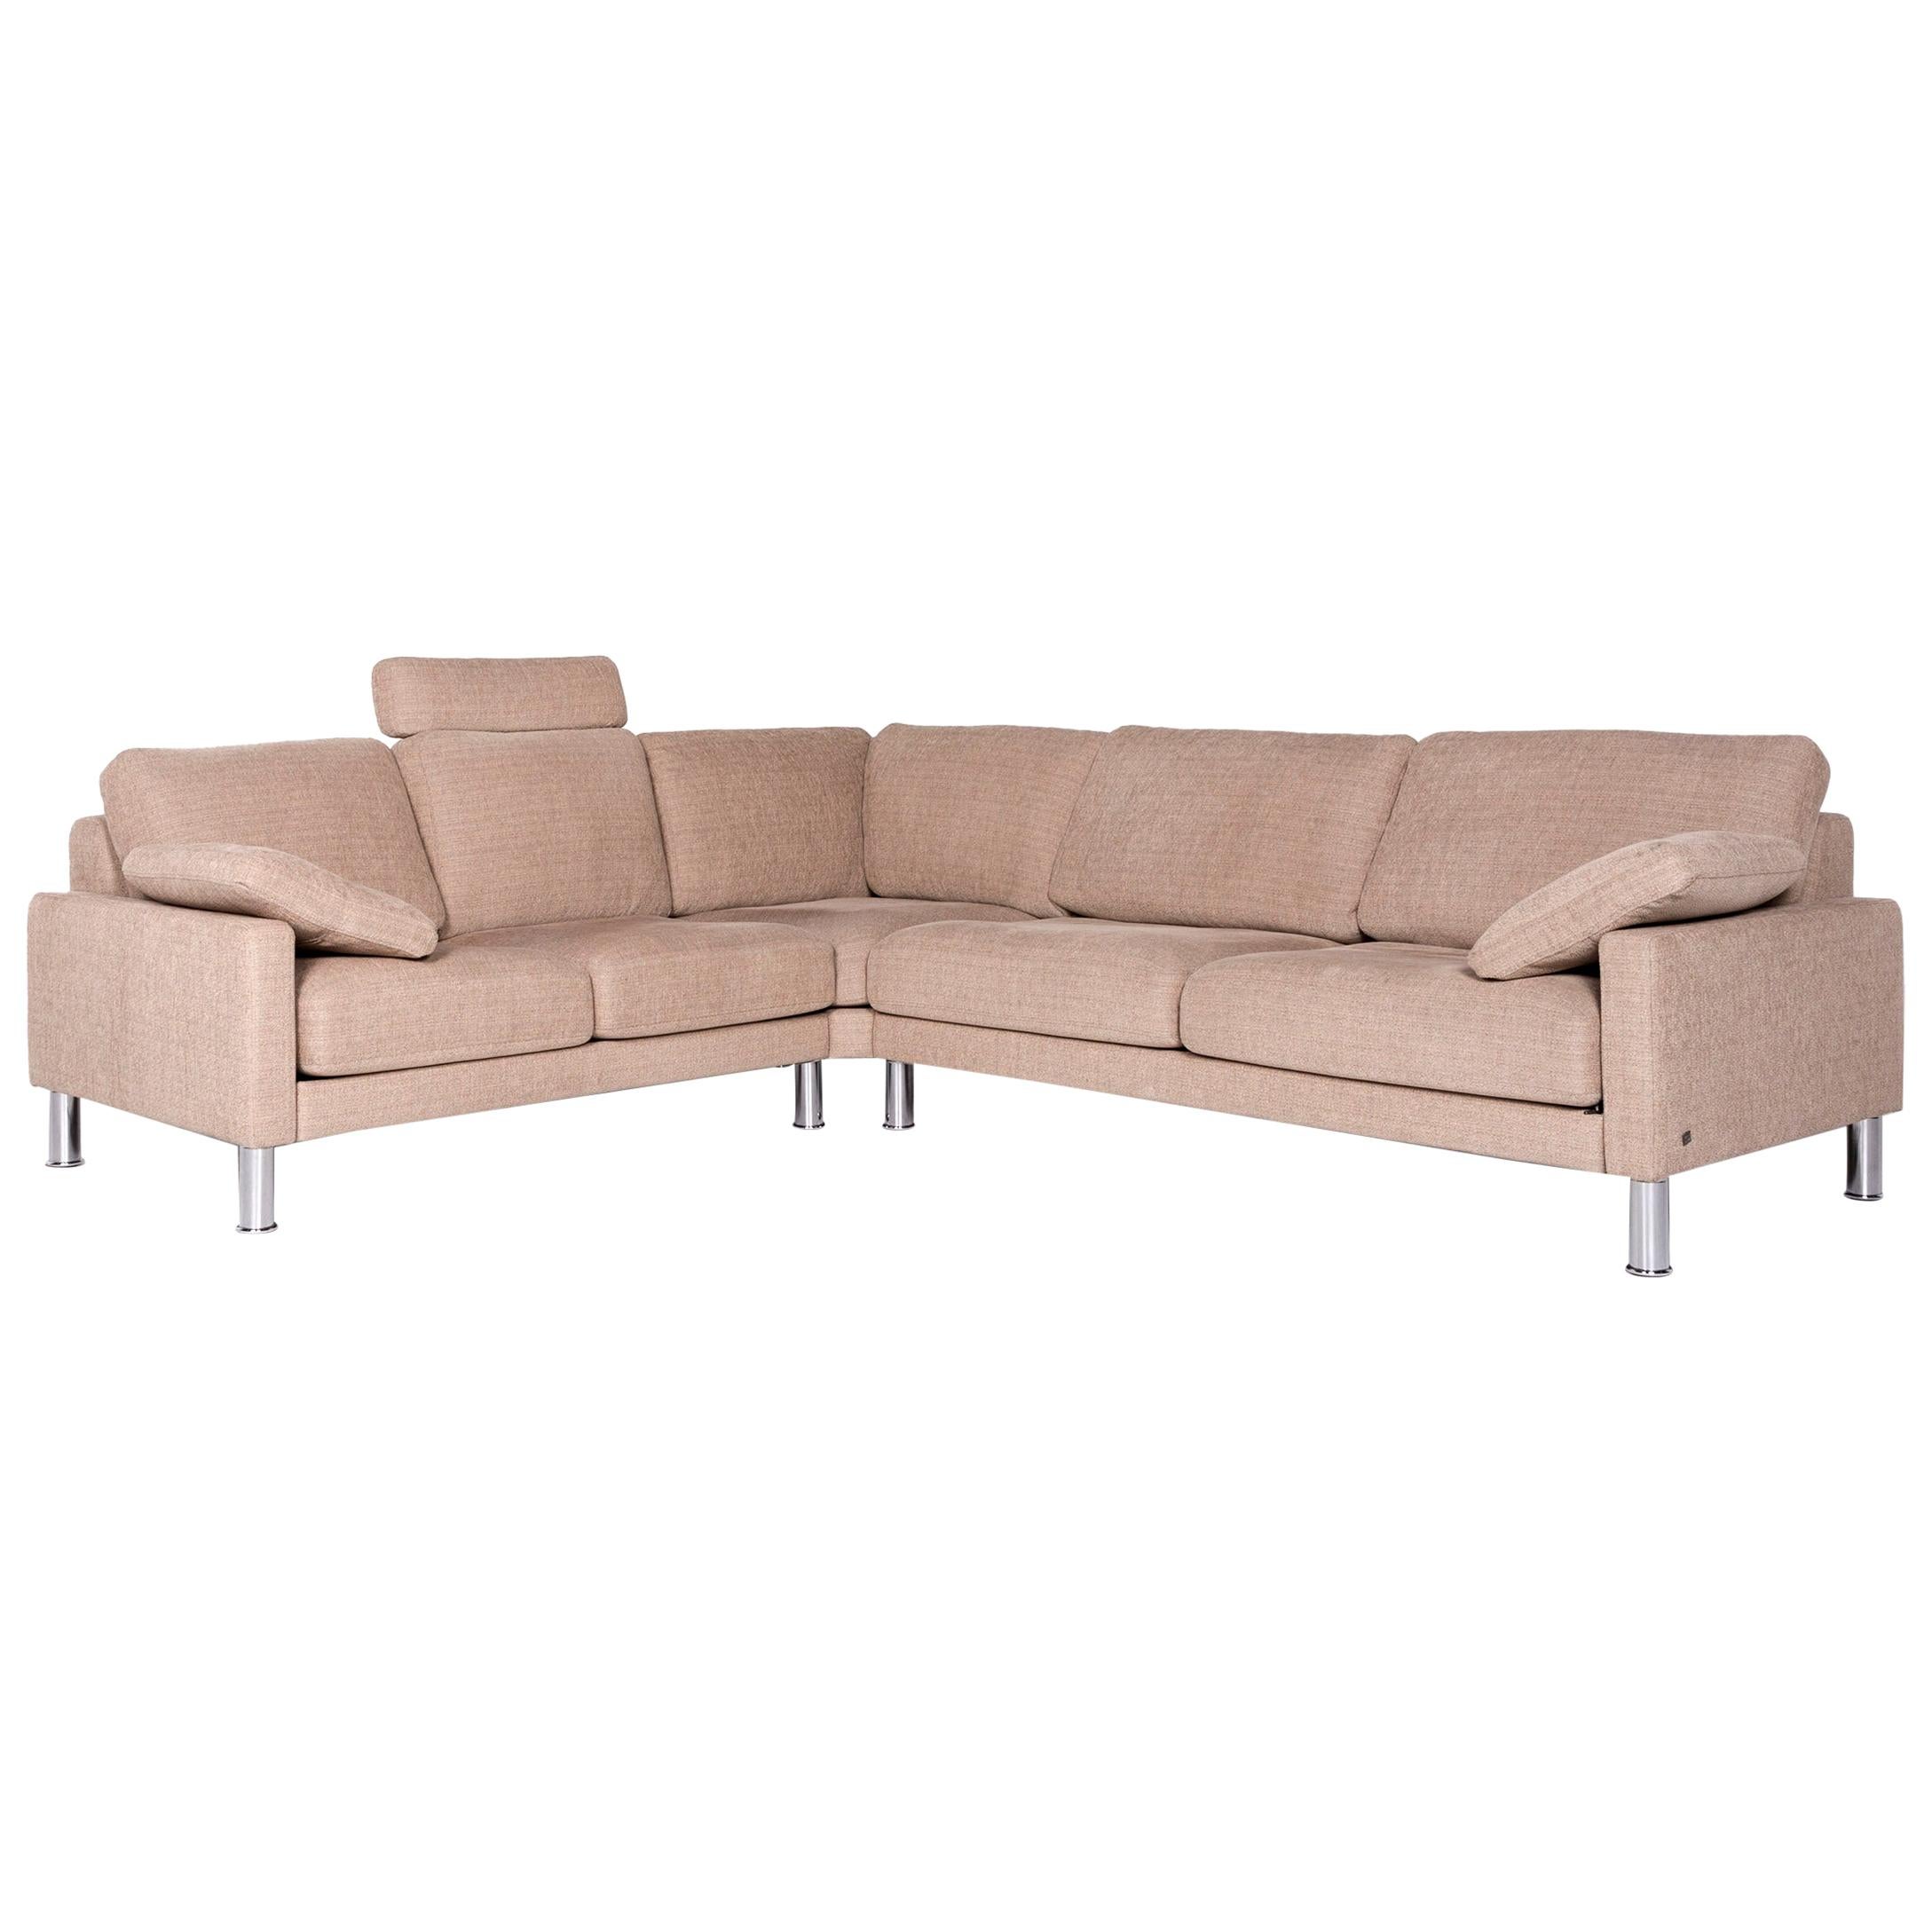 Rolf Benz Ego Designer Fabric Sofa Beige Corner Sofa Couch